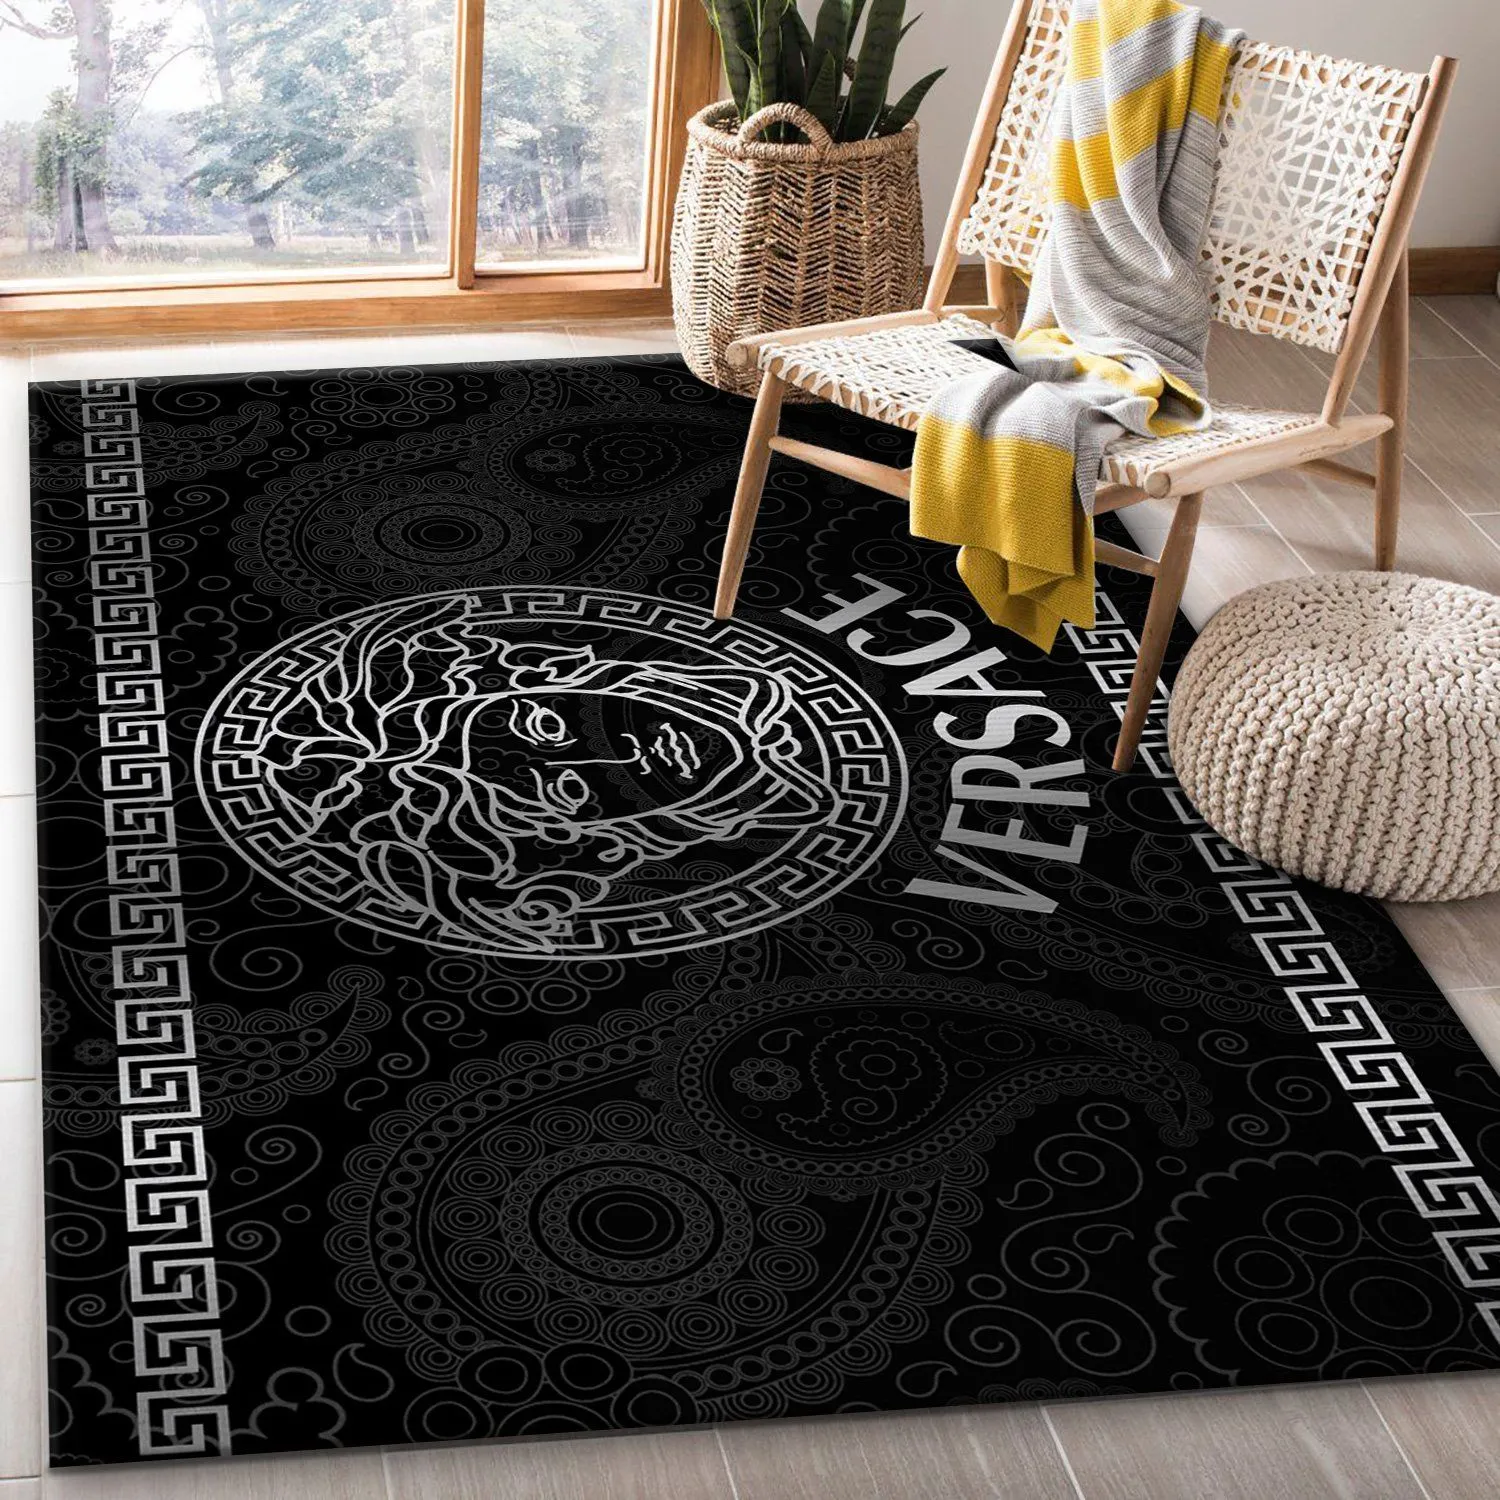 VersaceSil Rectangle Rug Home Decor Fashion Brand Door Mat Area Carpet Luxury